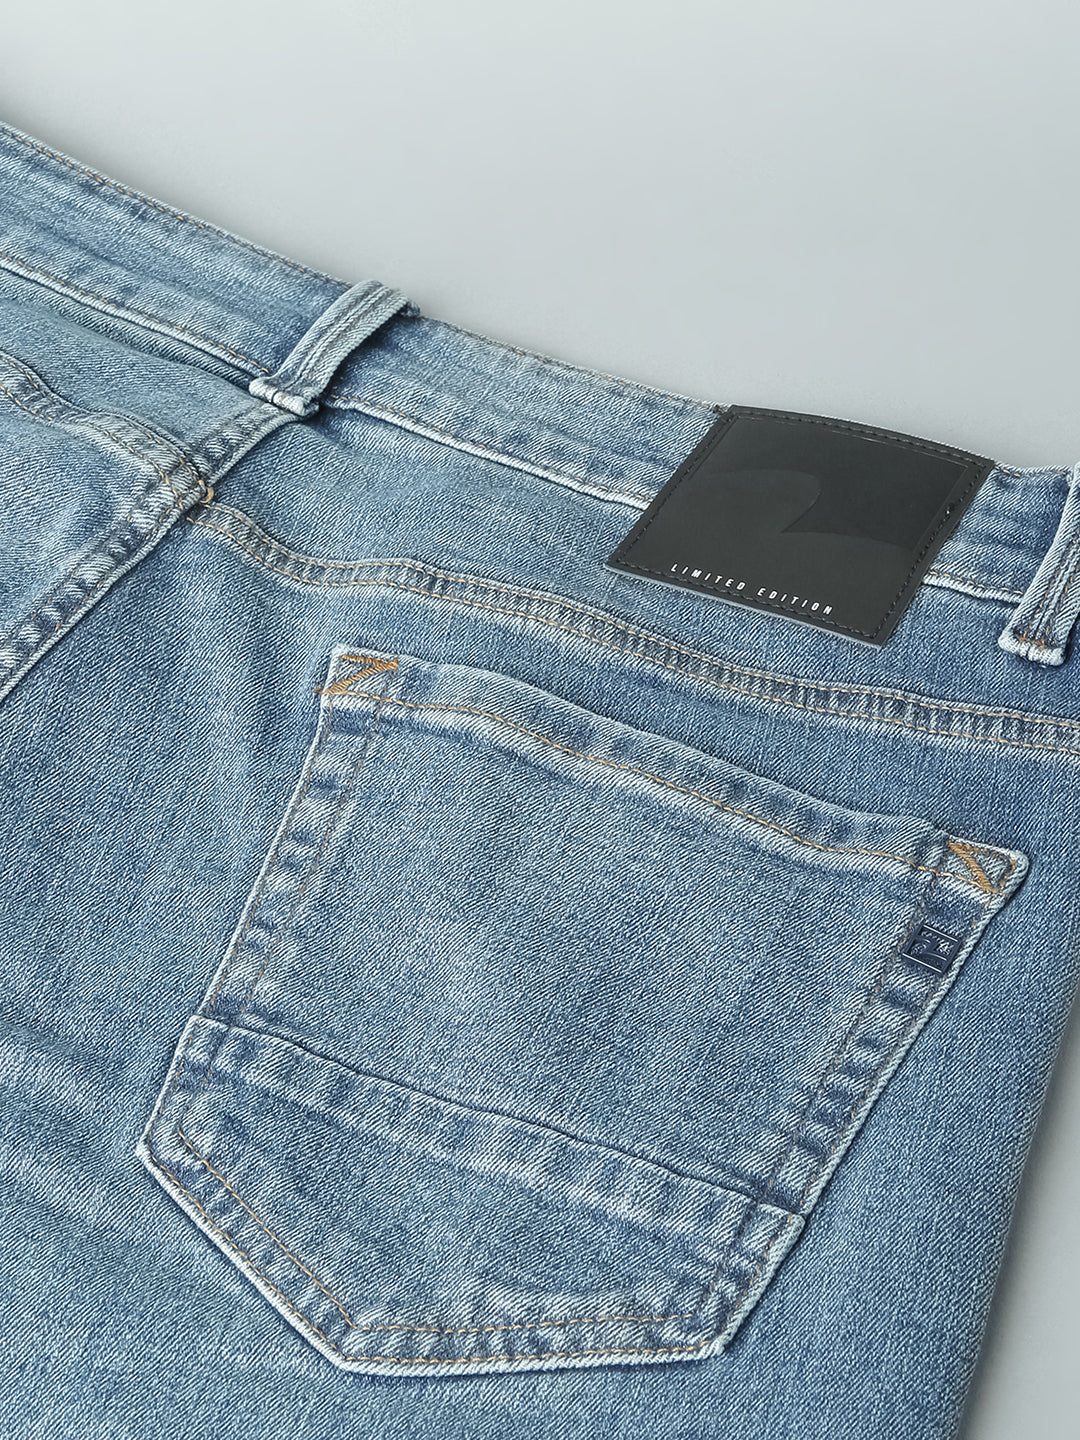 Spykar Limited Edition Mid Blue Regular Fit Narrow Length Mid rise Knee Slit Premium Stretchable Denim Jeans For Men (Rover)